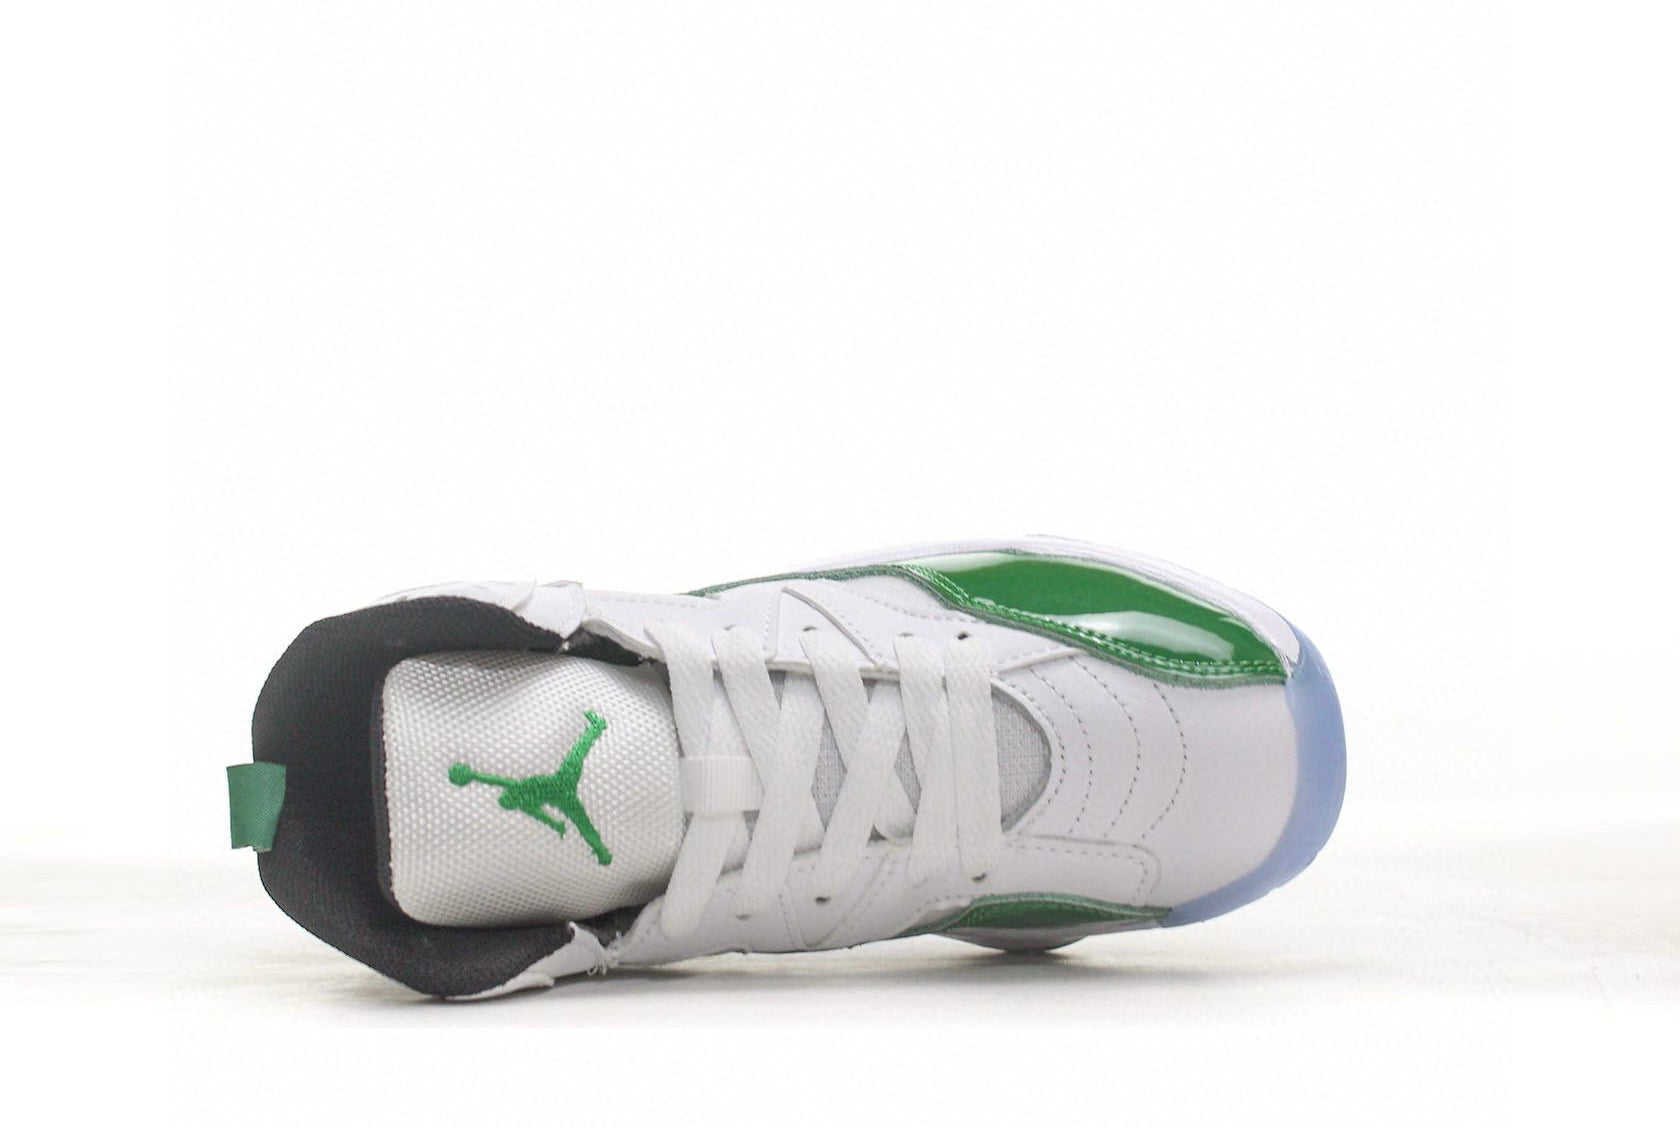 Nike air jordan rétro chaussures vertes